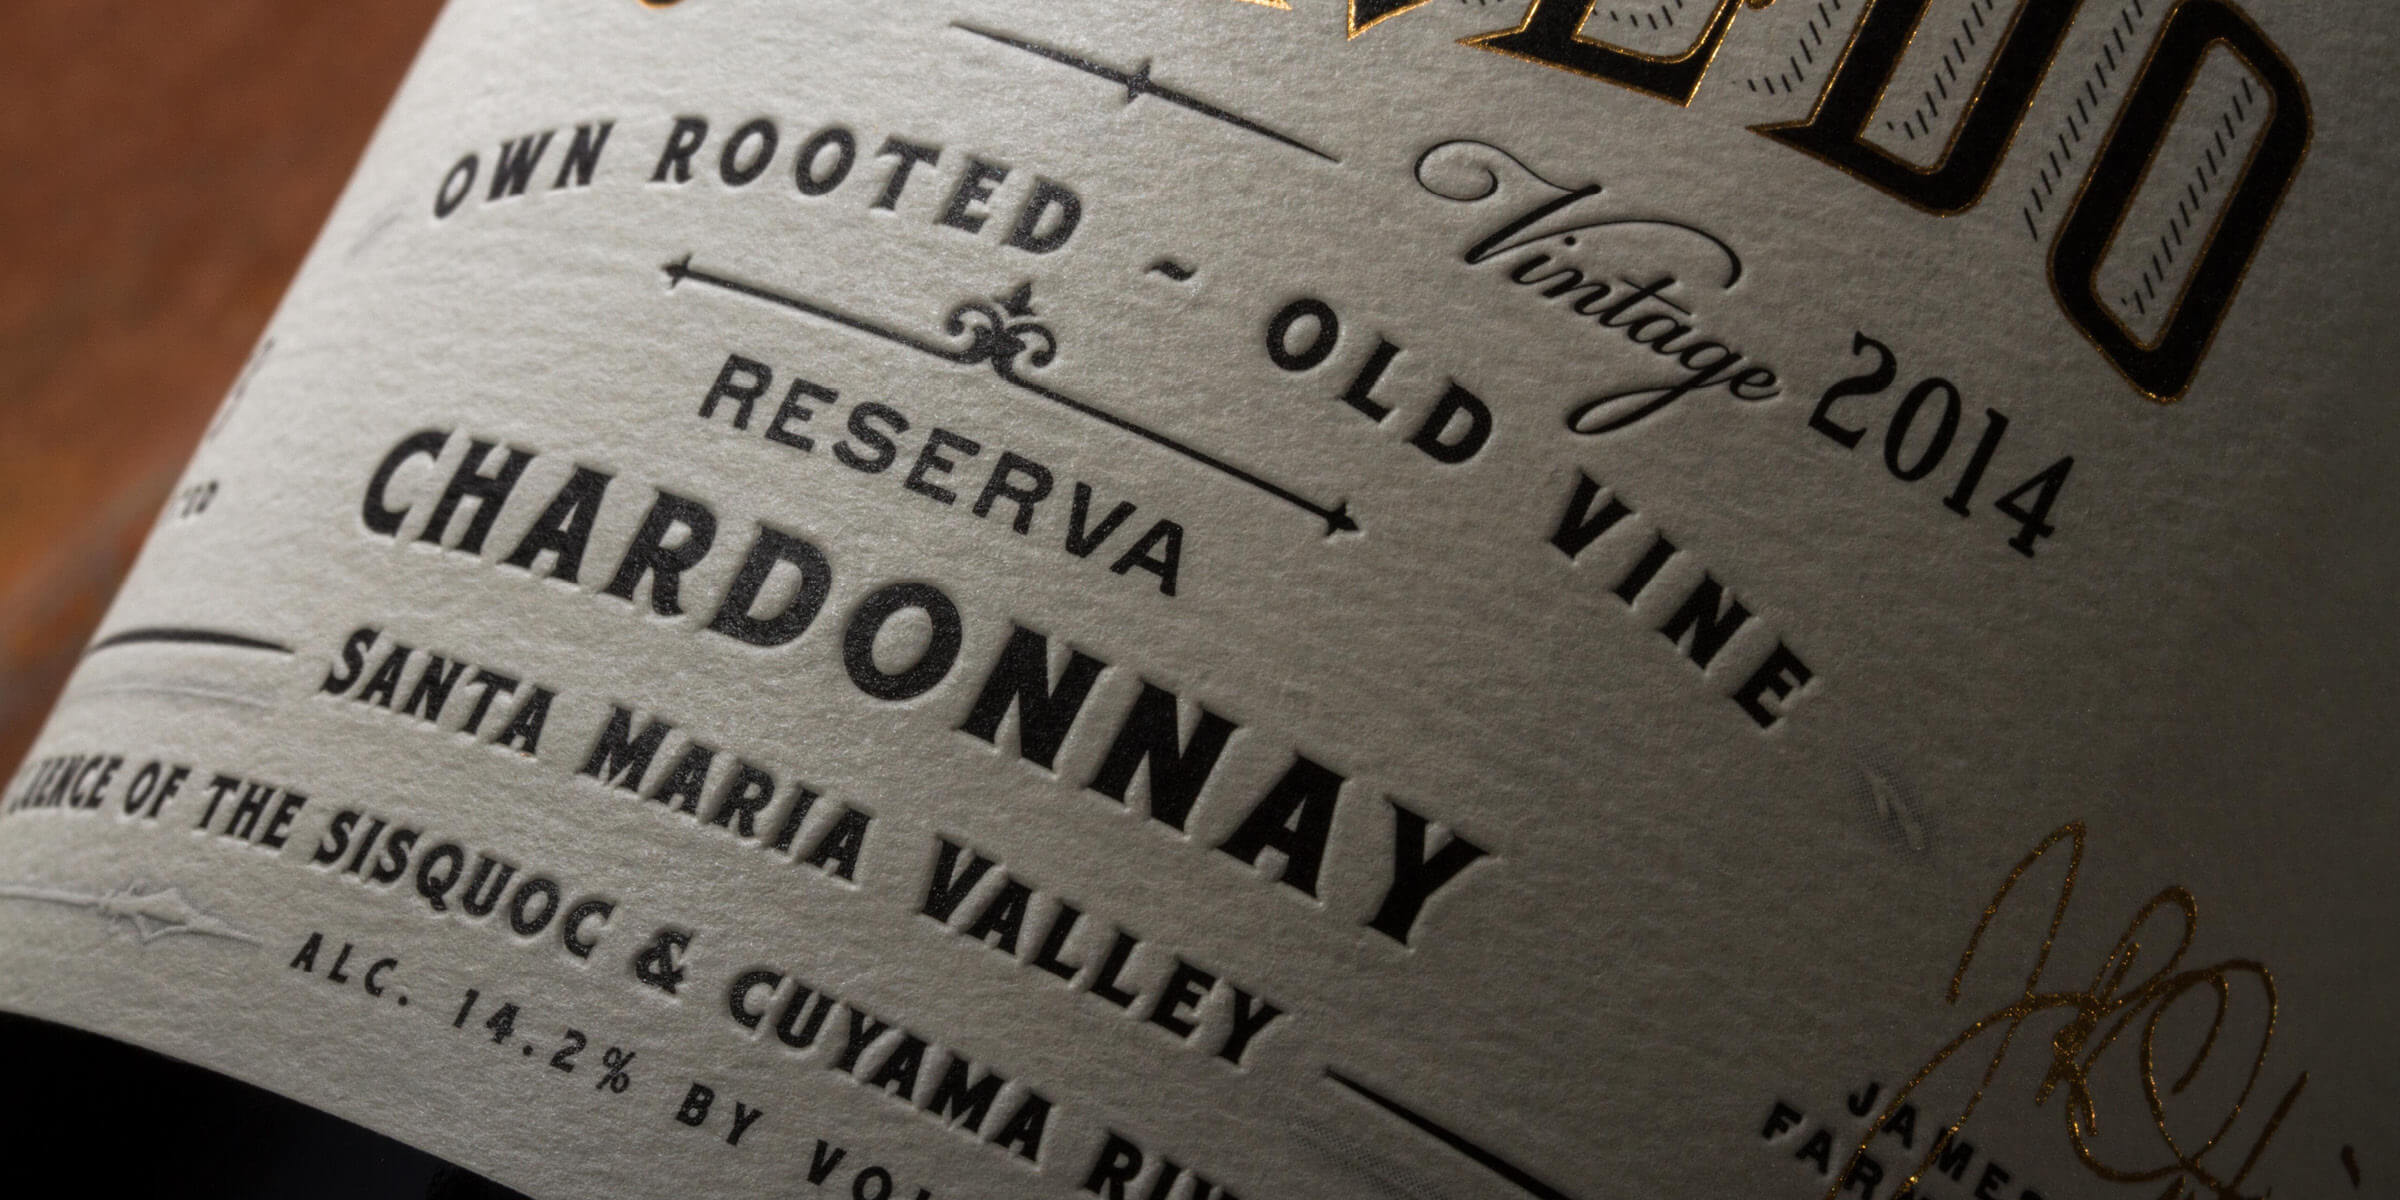 2014 Reserva Chardonnay